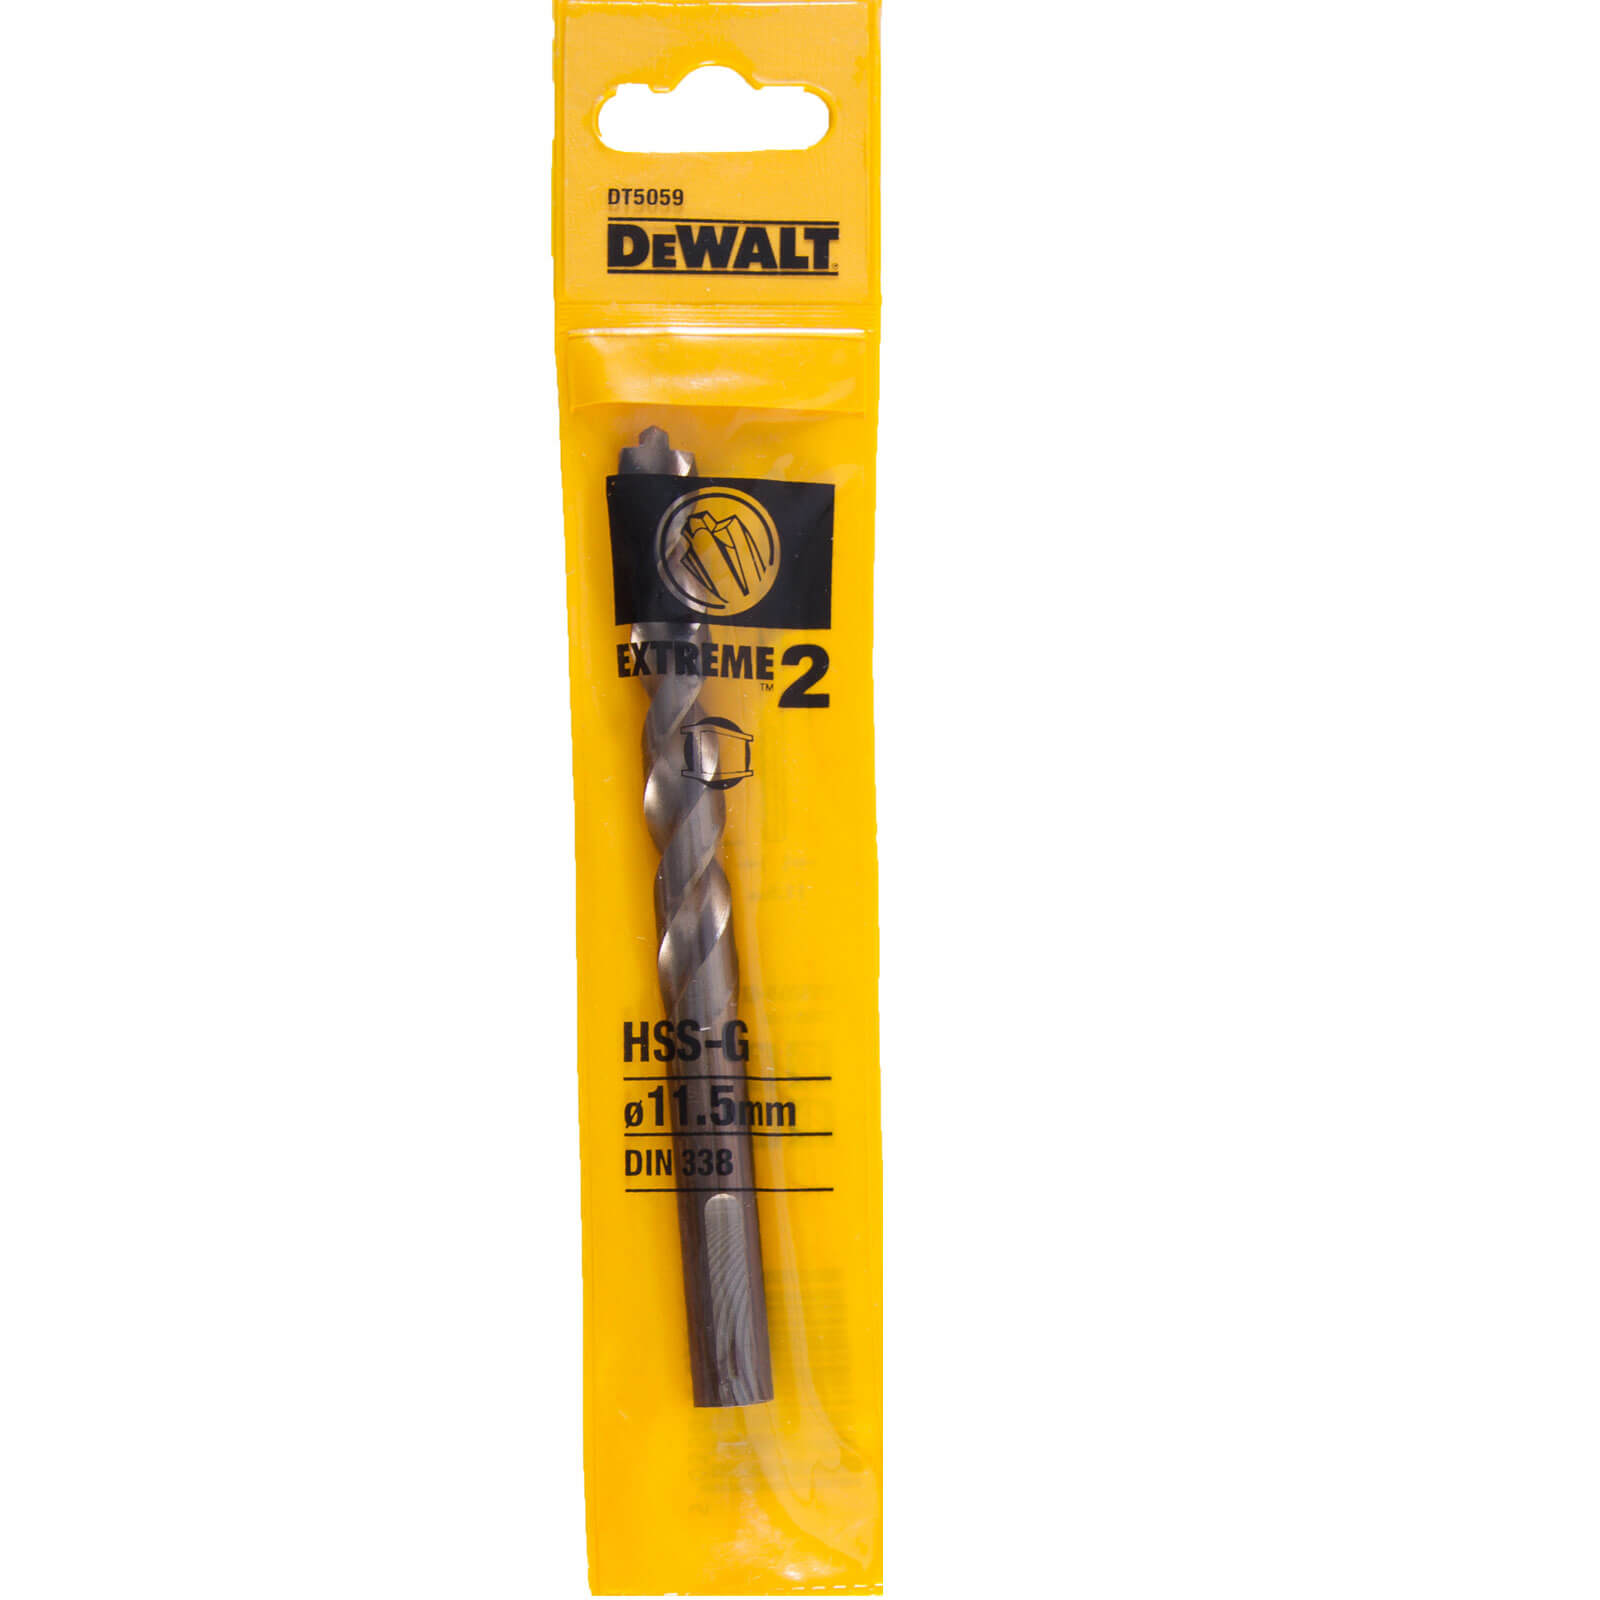 Image of DeWalt Extreme 2 Metal Drill Bit 11.5mm Pack of 1